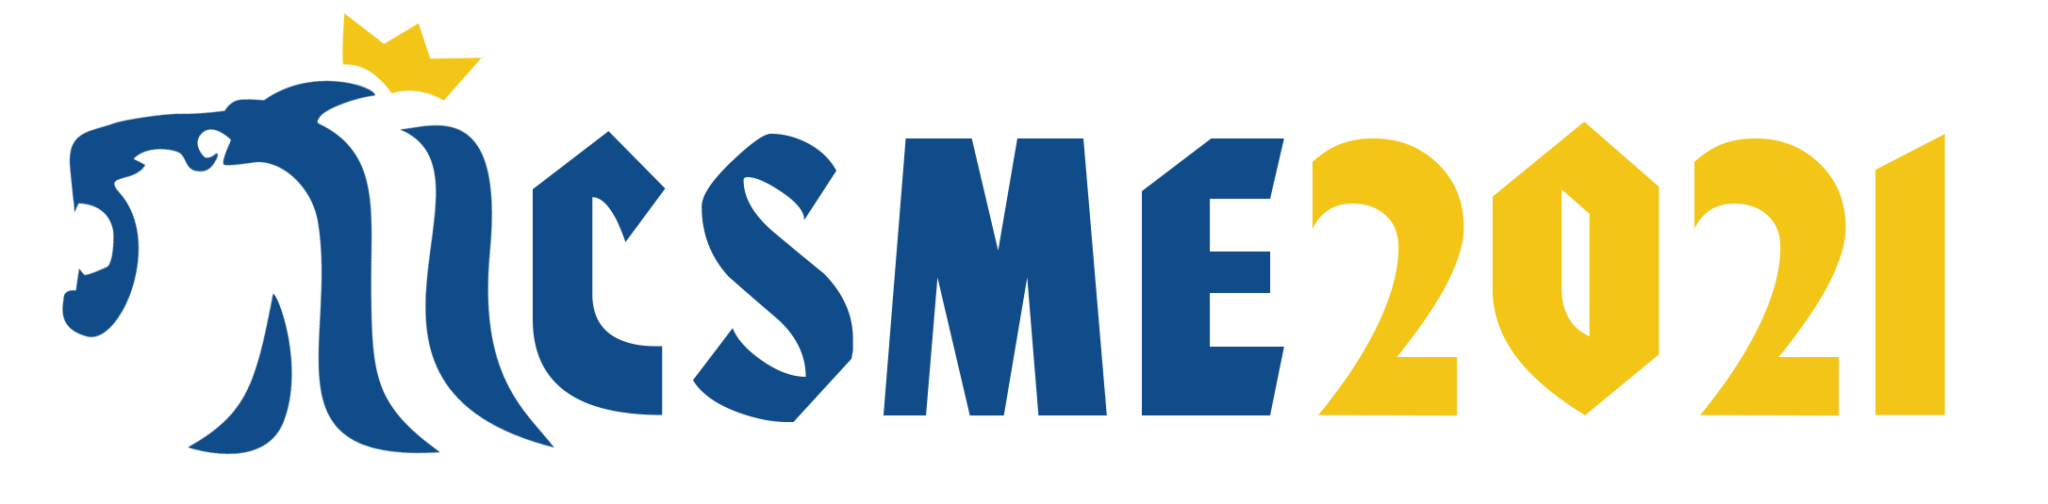 ICSME logo